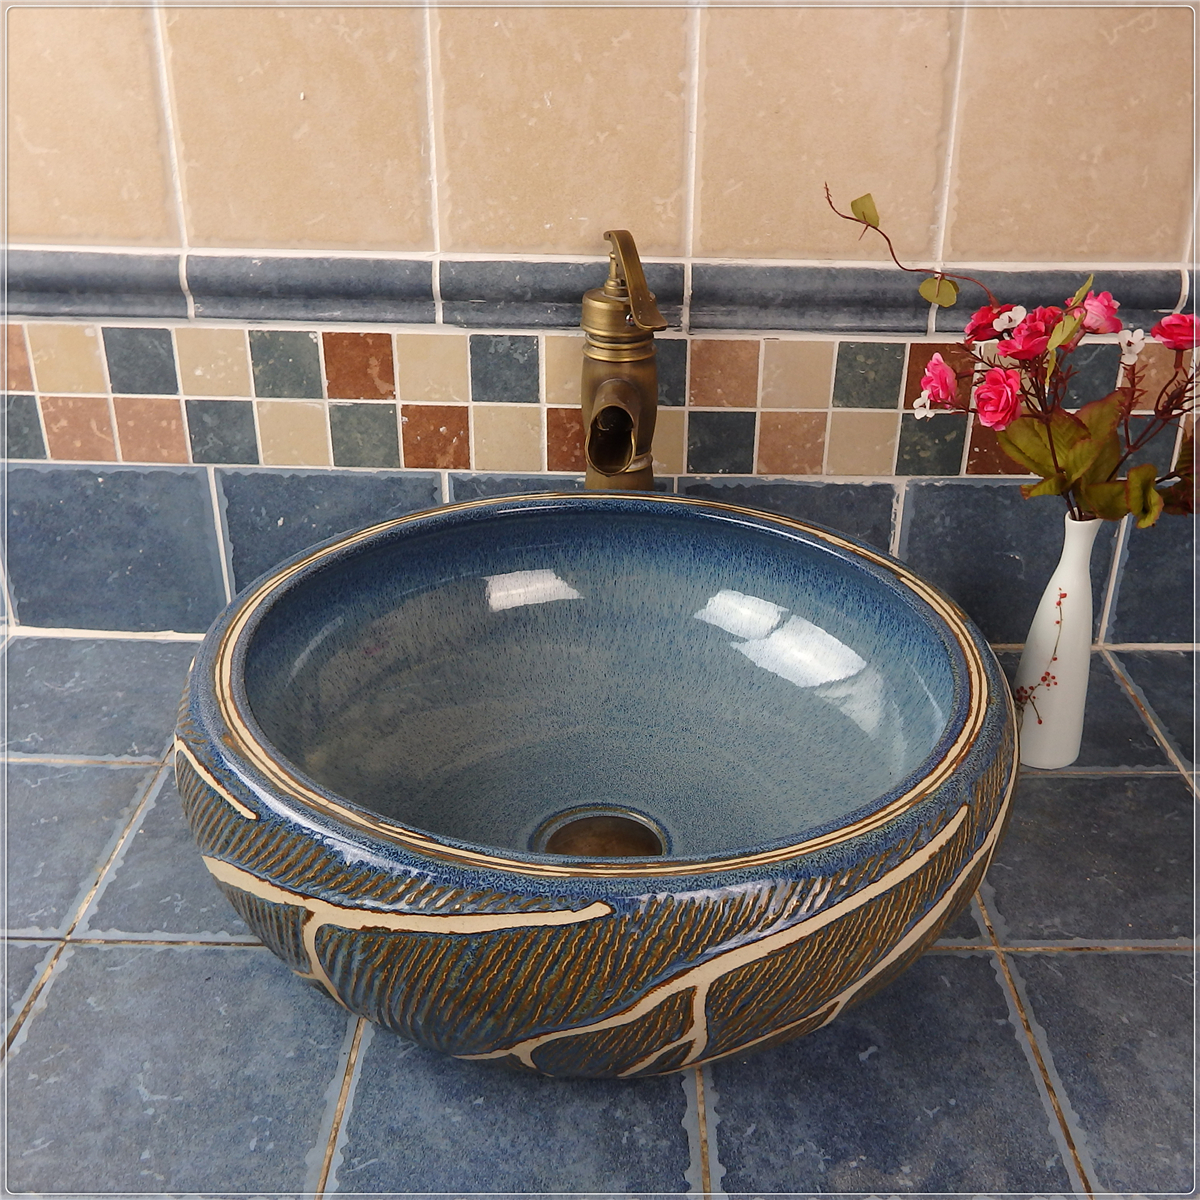 Yunnuo commercial bathroom commode ceramic sanitary ware toilet hand wash basin design